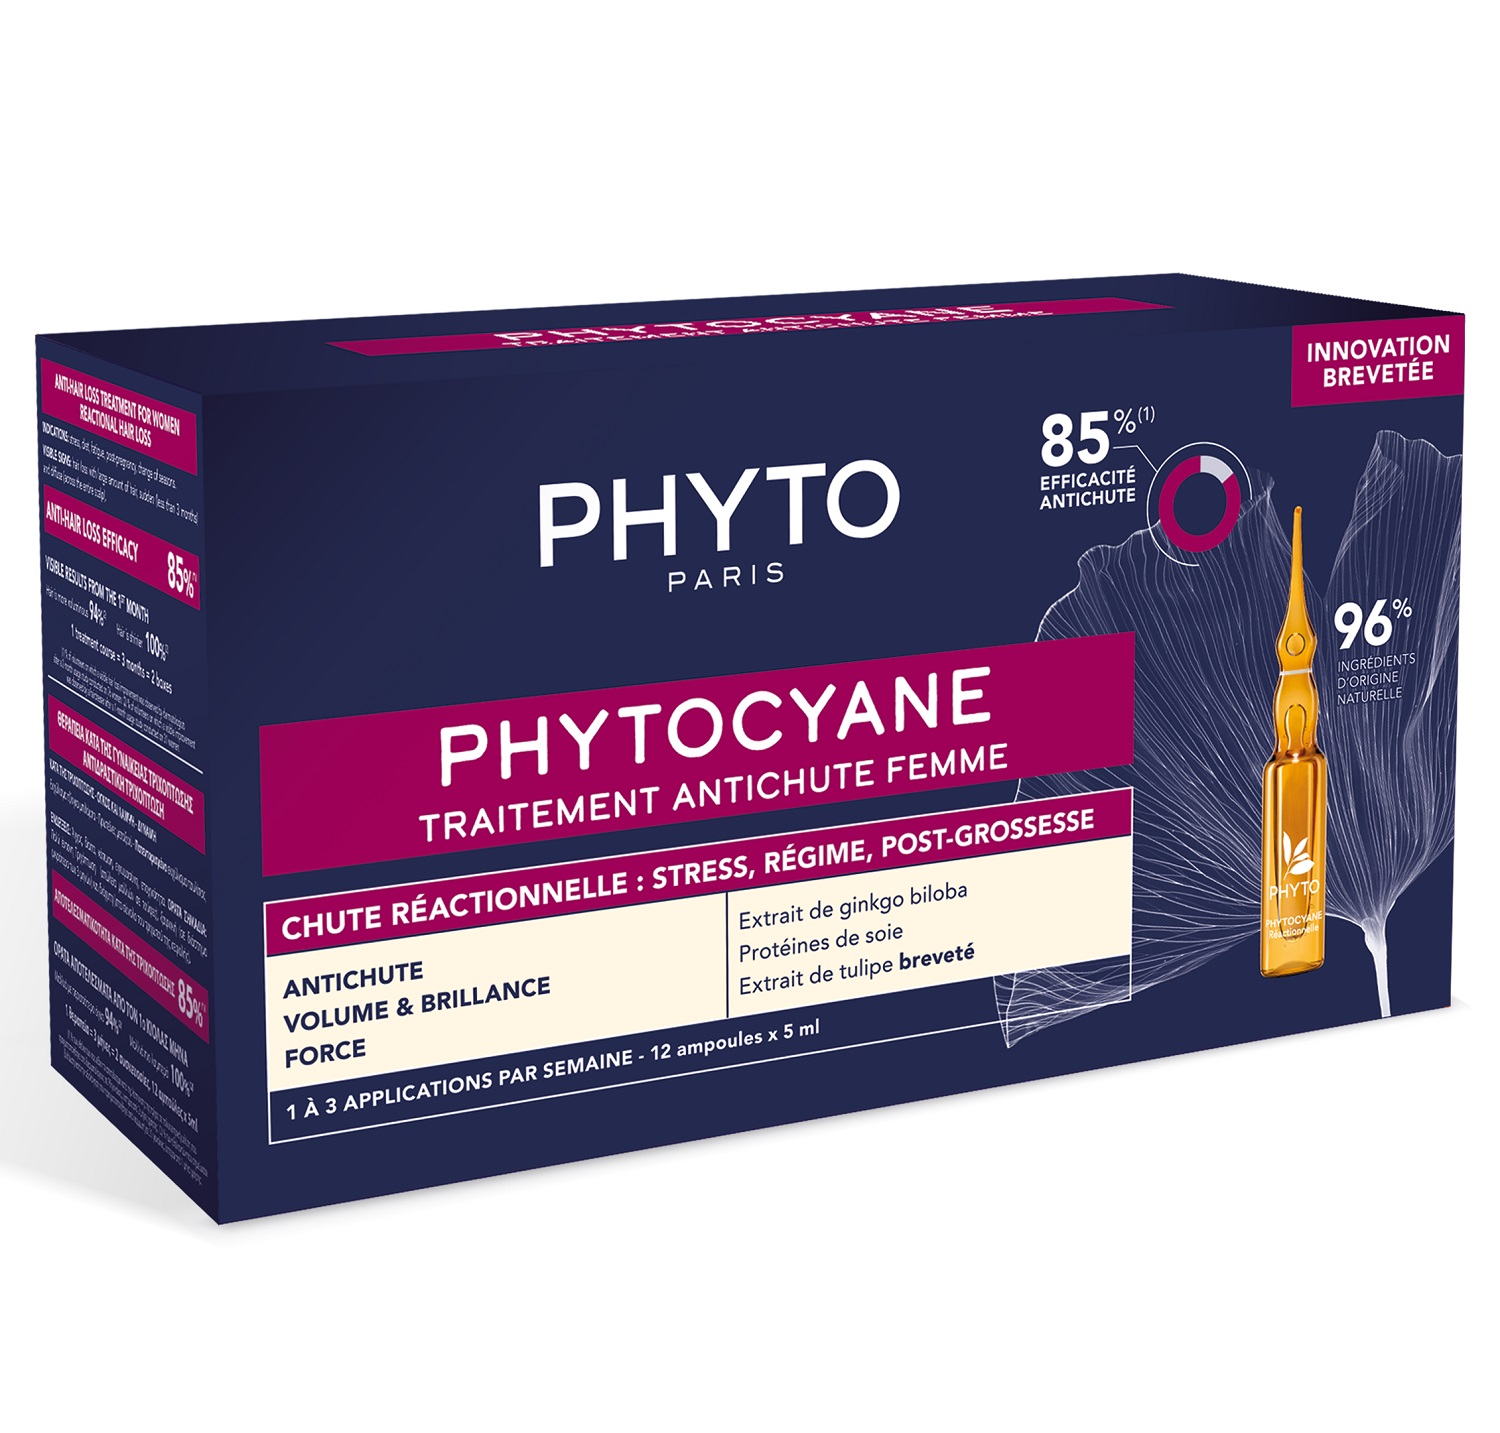 Phyto Сыворотка против выпадения волос для женщин, 12 ампул х 5 мл (Phyto, Phytocyane) phyto набор для женщин сыворотка от выпадения волос 12x5 мл укрепляющий шампунь 100 мл phyto phytocyane